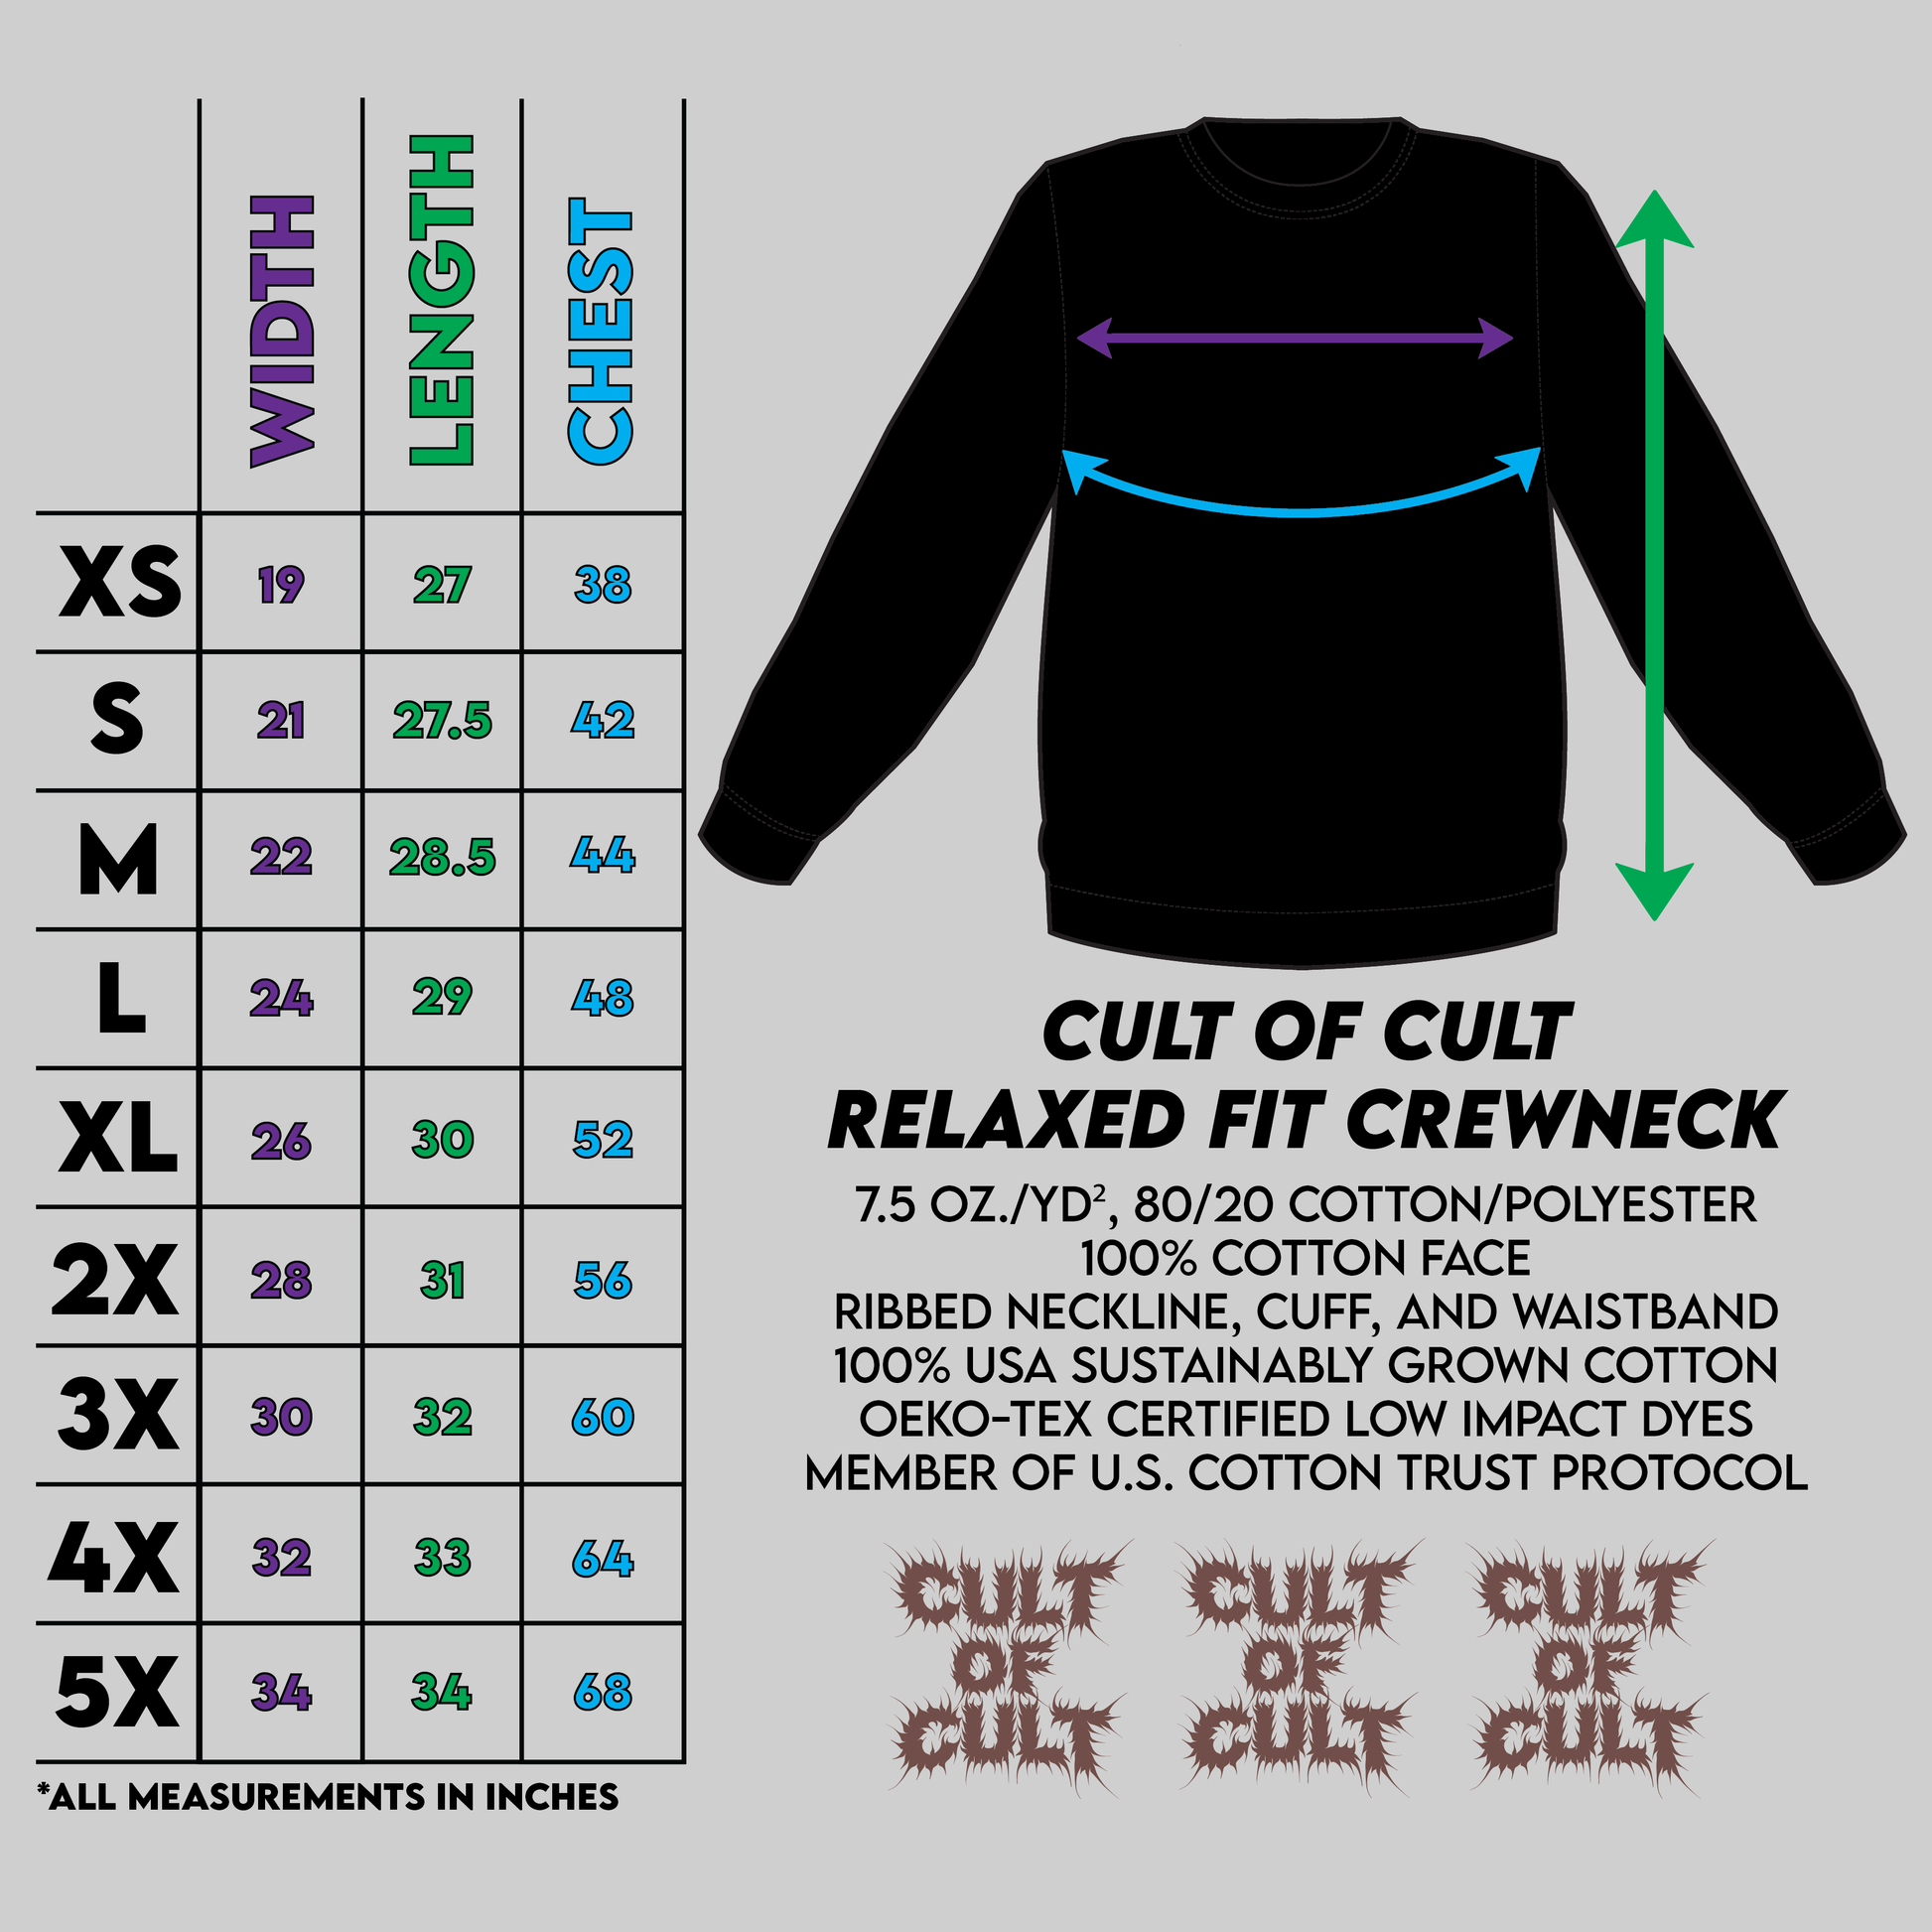 Cult of Cult crewneck sweatshirt sizing chart